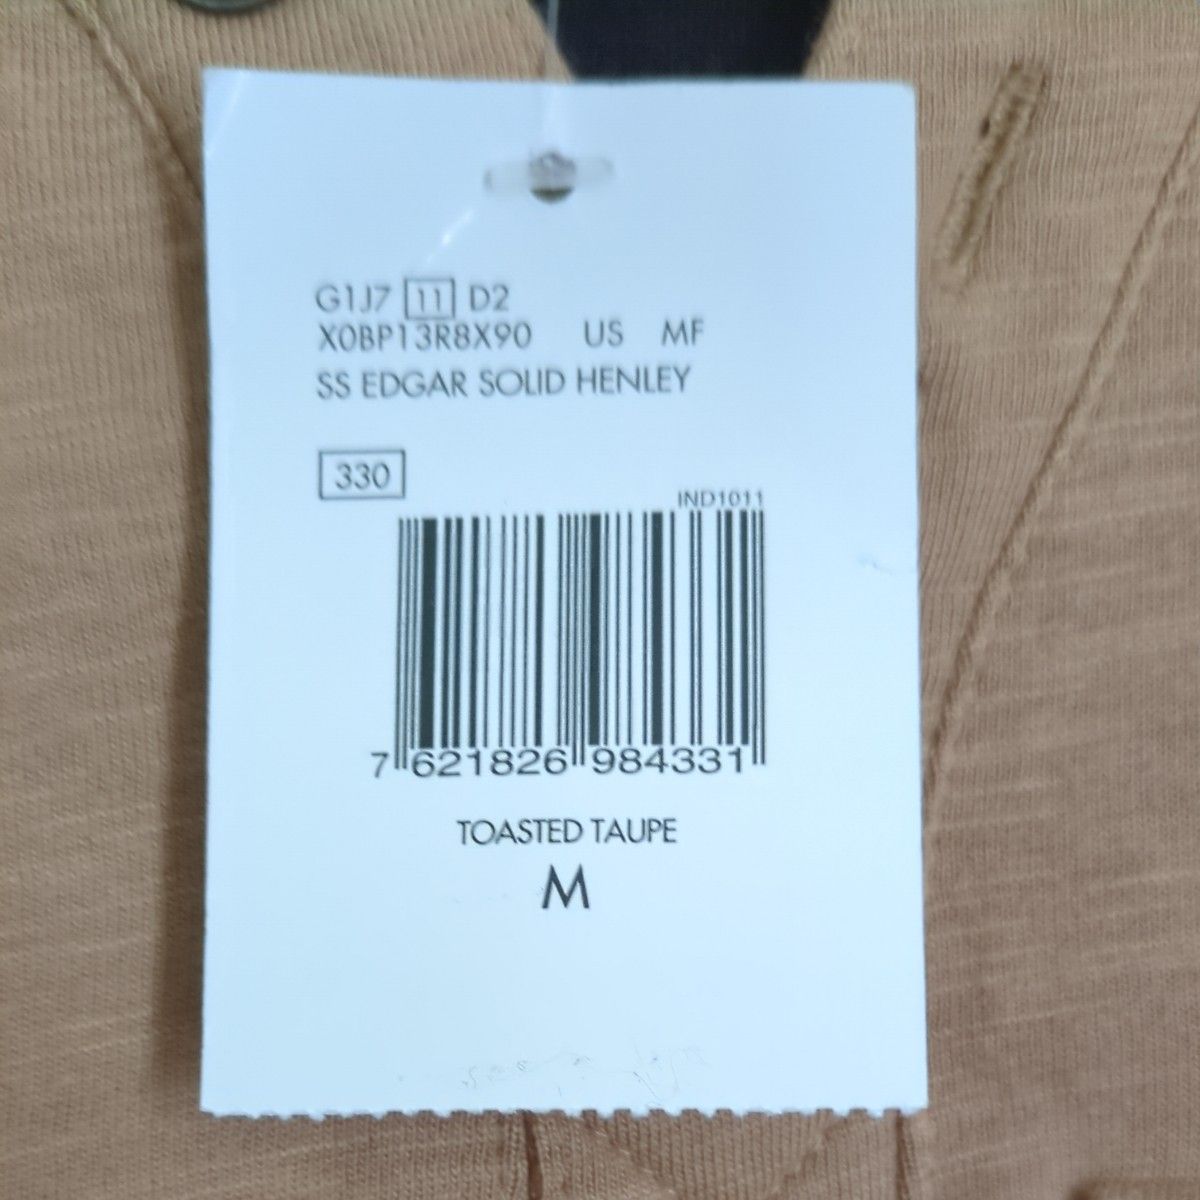 GUESS Denim ゲス デニム Tシャツ Tee M 新品 タグ付 茶 ブラウン 海外 インポート 半袖 ボタン ショート